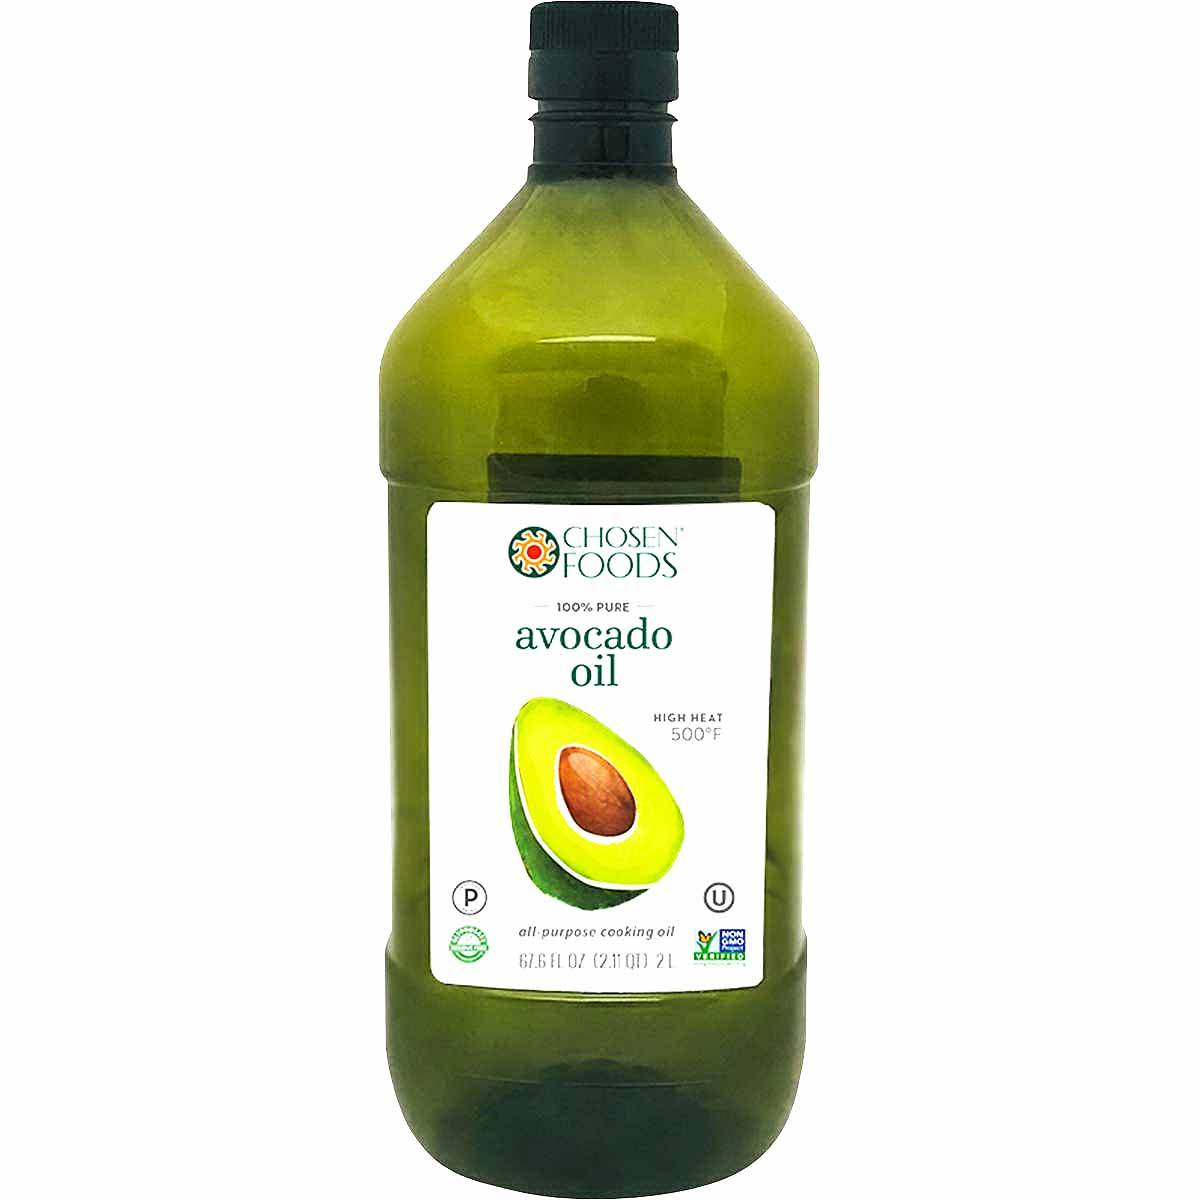 CHOSEN FOODS Avocado Oil, 2 L. 